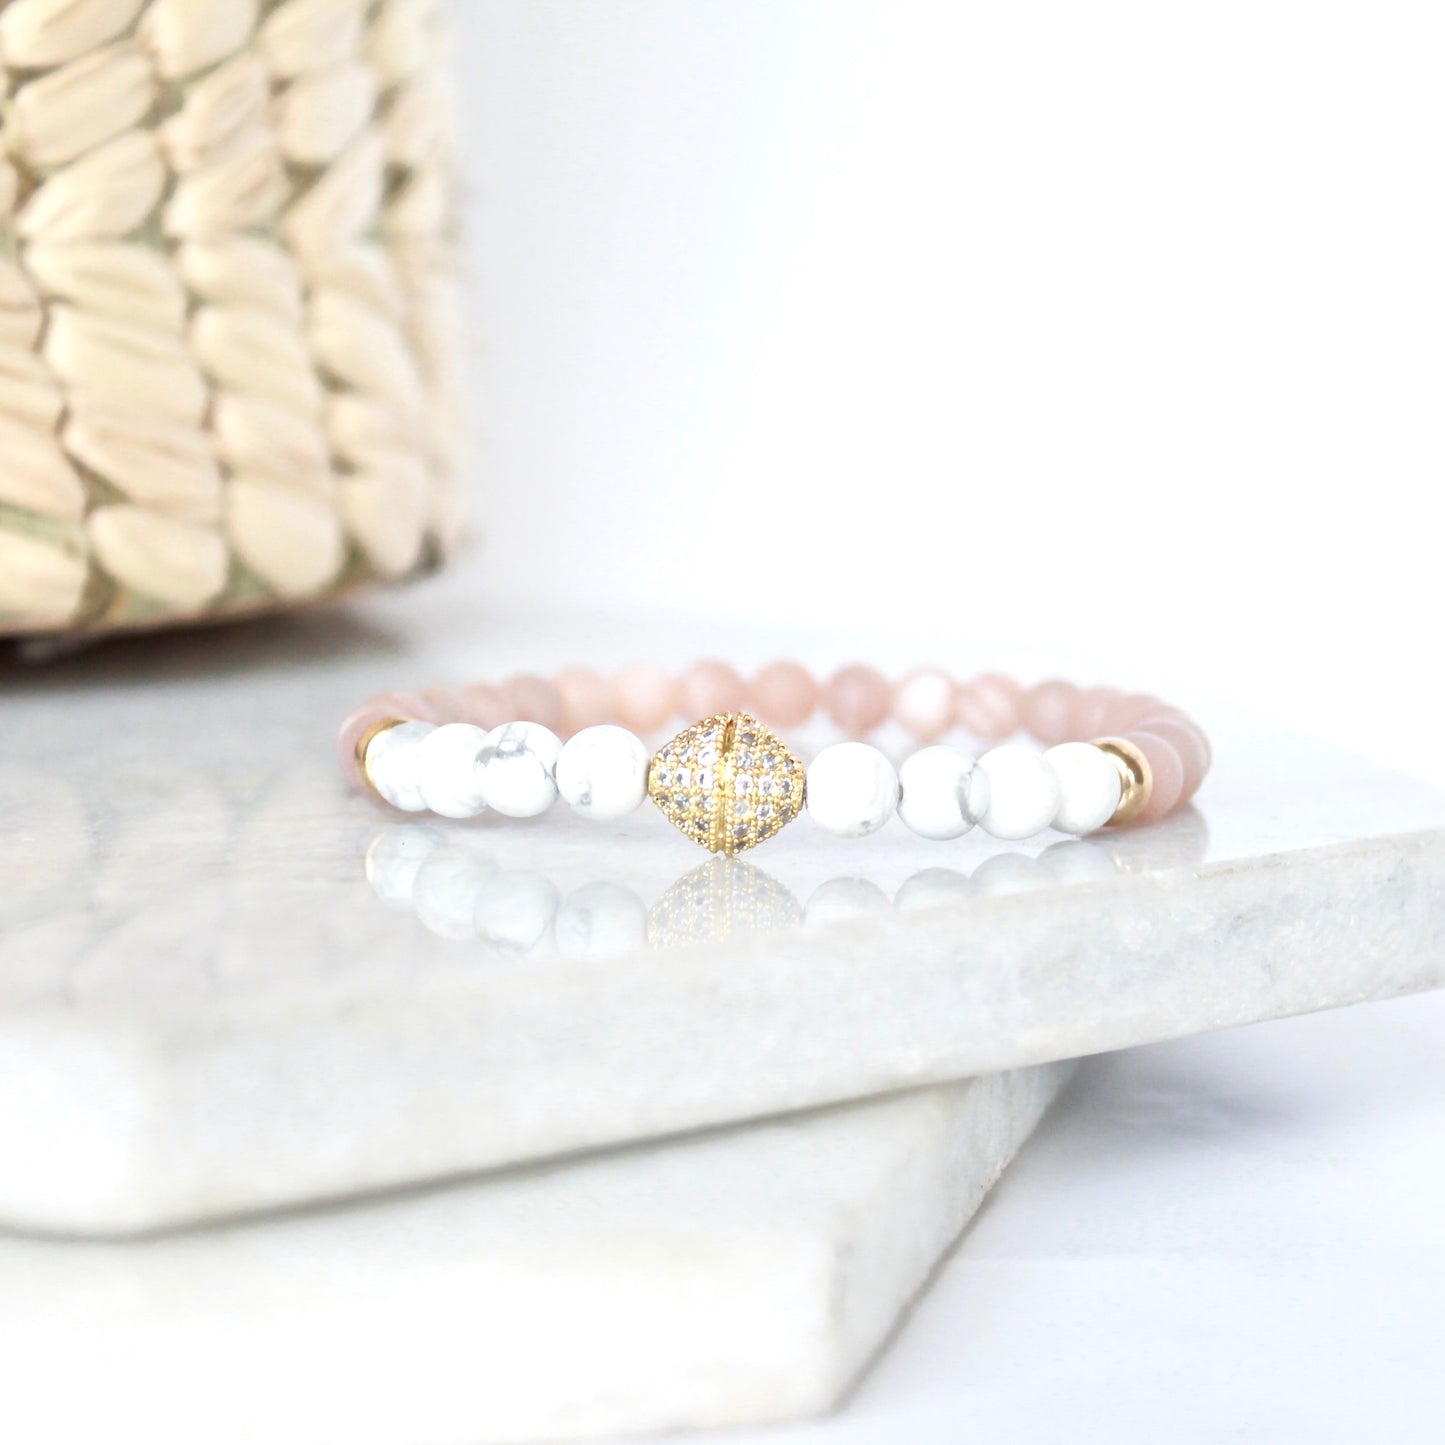 The Glow Up Bracelet - Pink Moonstone